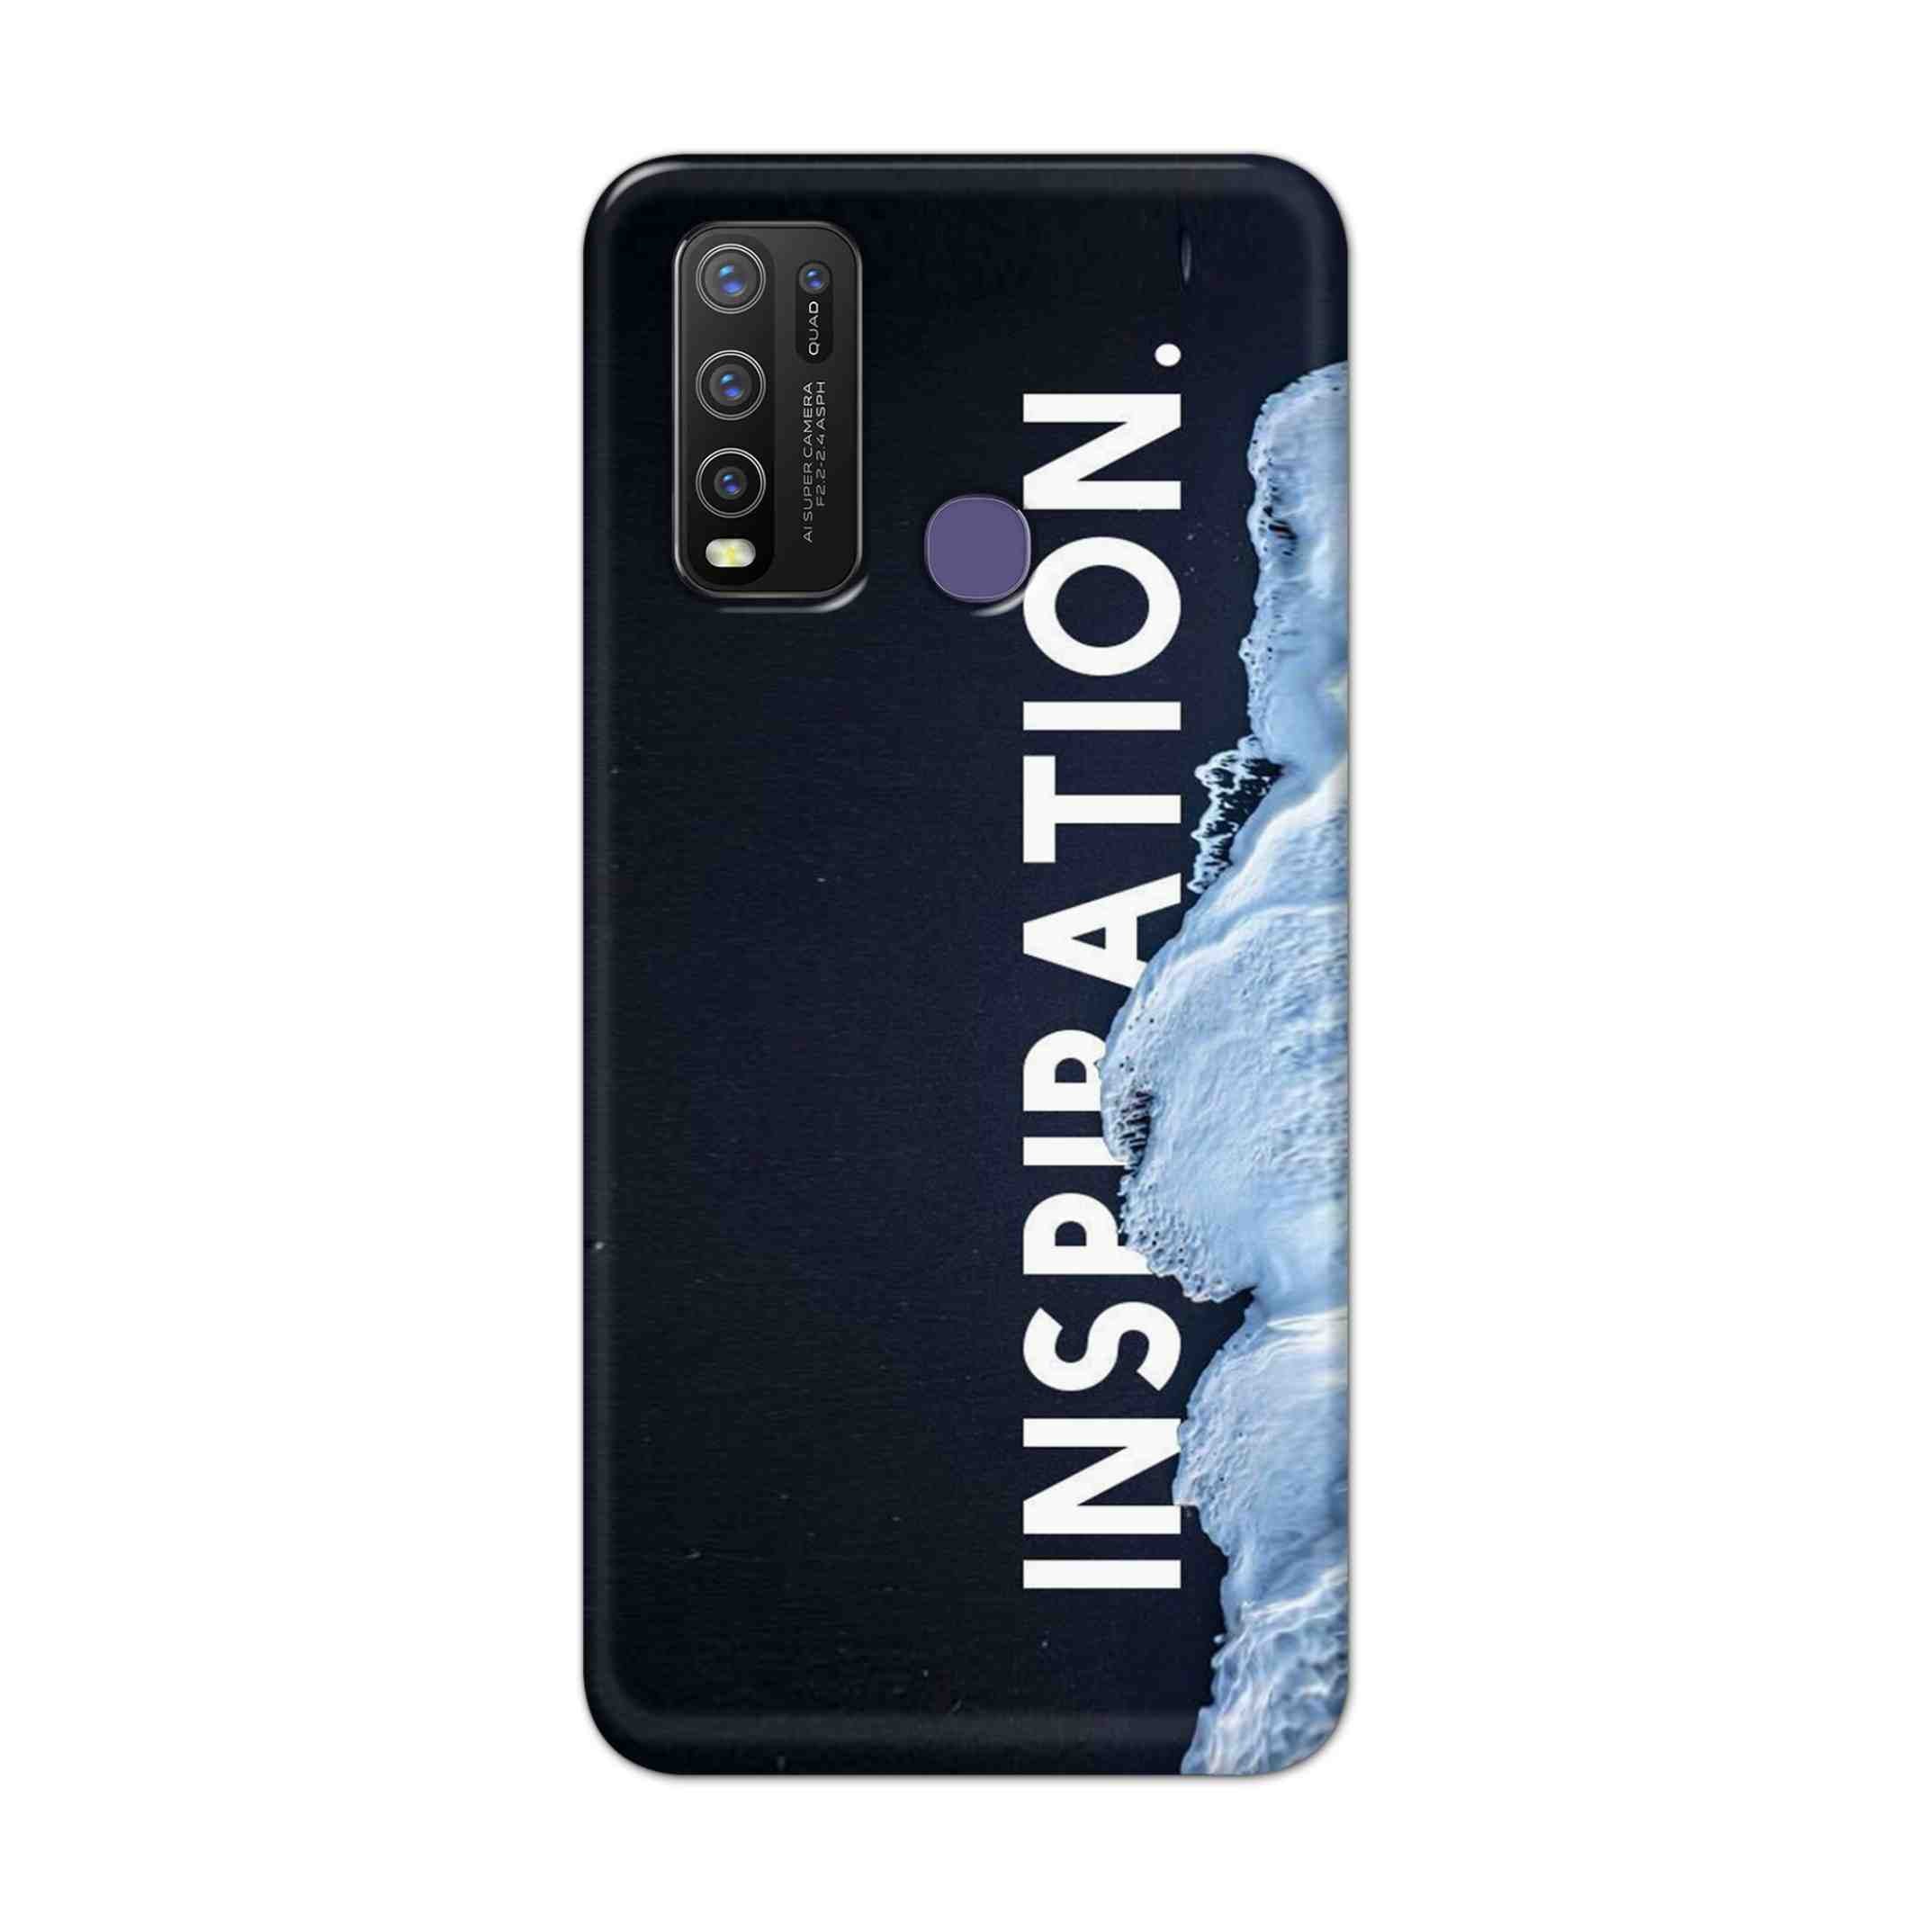 Buy Inspiration Hard Back Mobile Phone Case Cover For Vivo Y50 Online